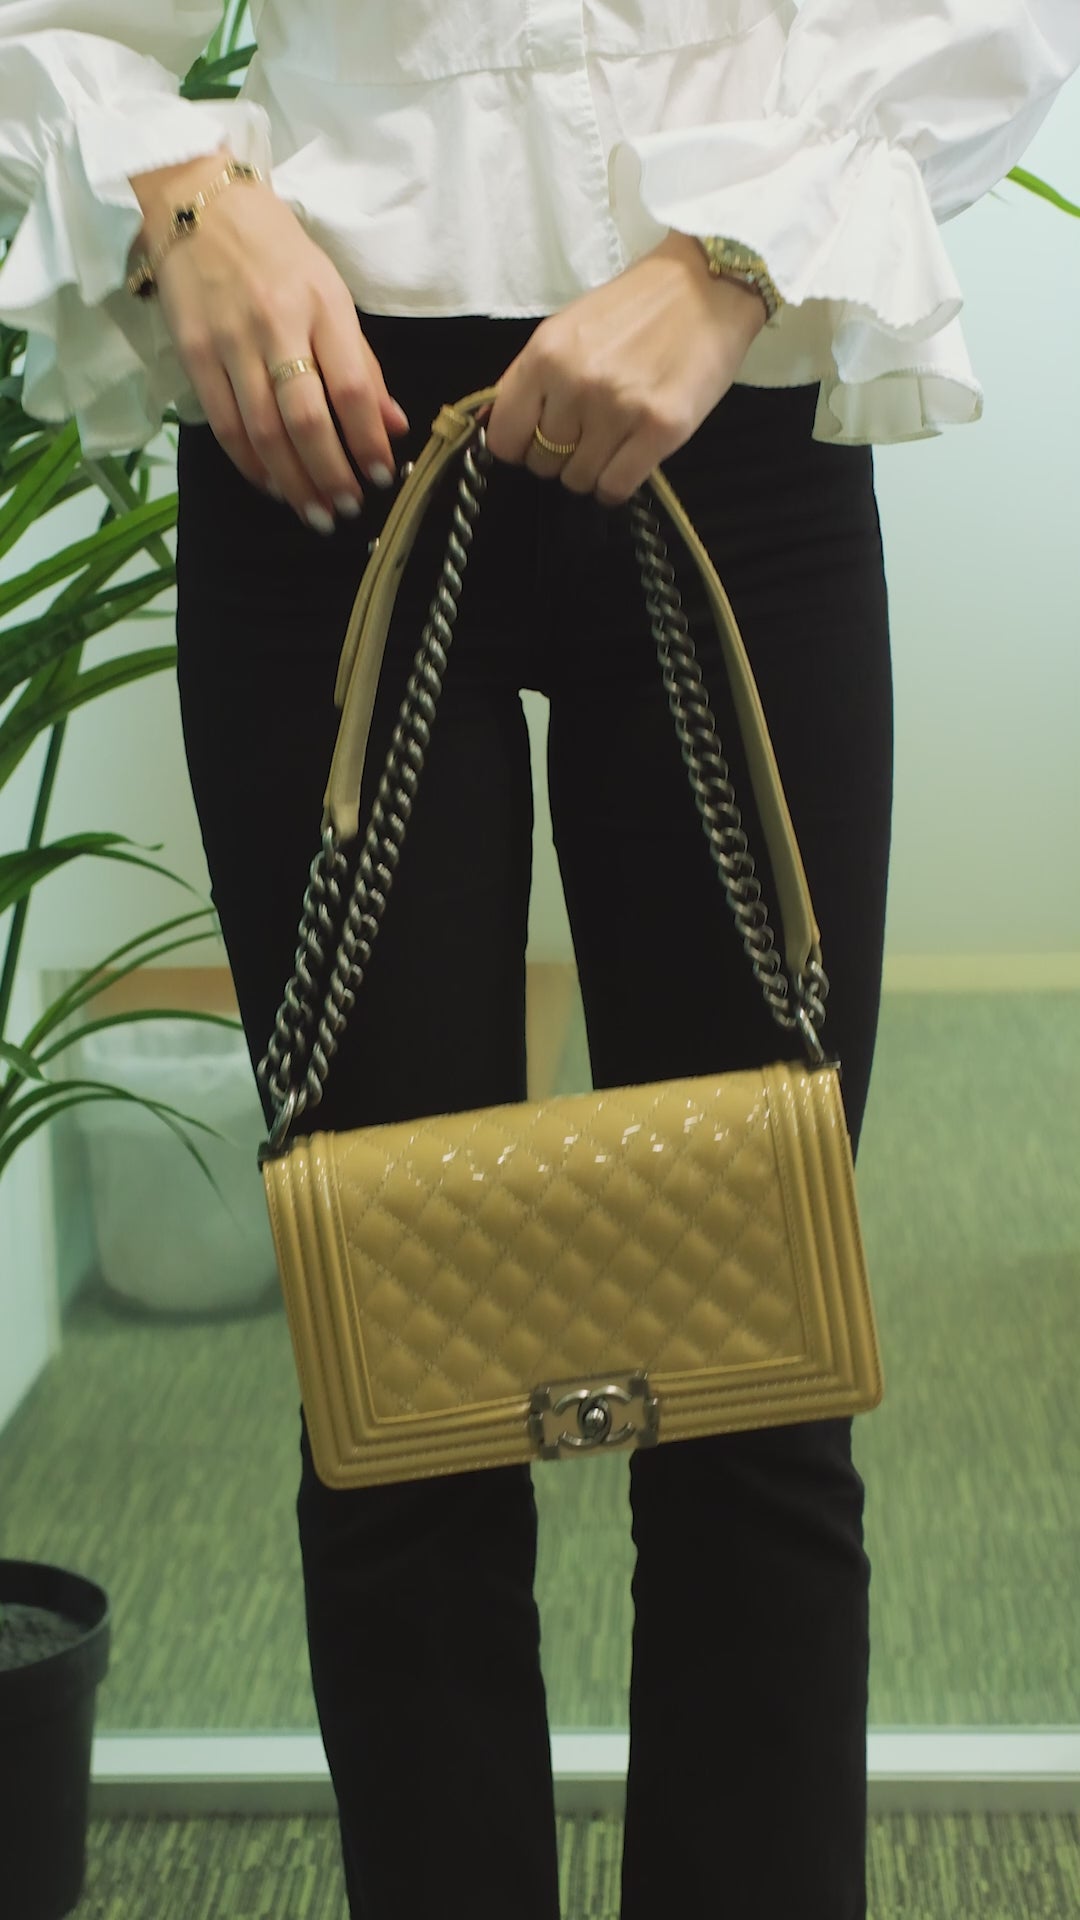 Chanel Medium Boy Bag in Beige Patent Finish (Shiny)